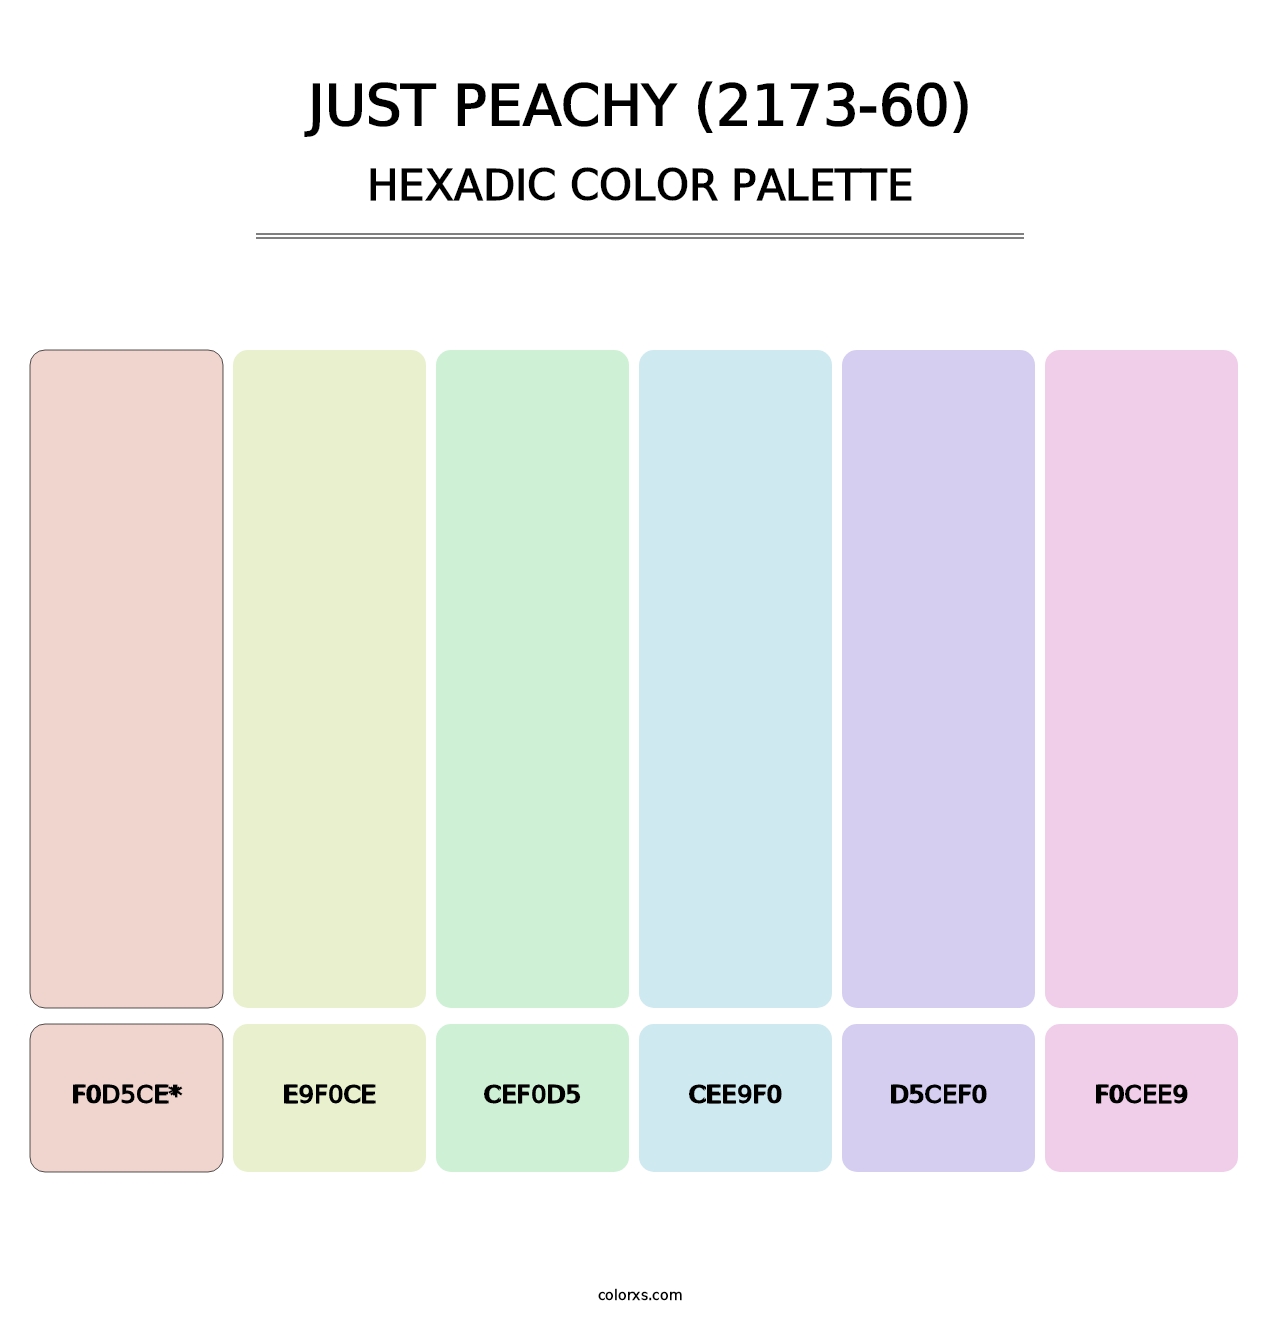 Just Peachy (2173-60) - Hexadic Color Palette